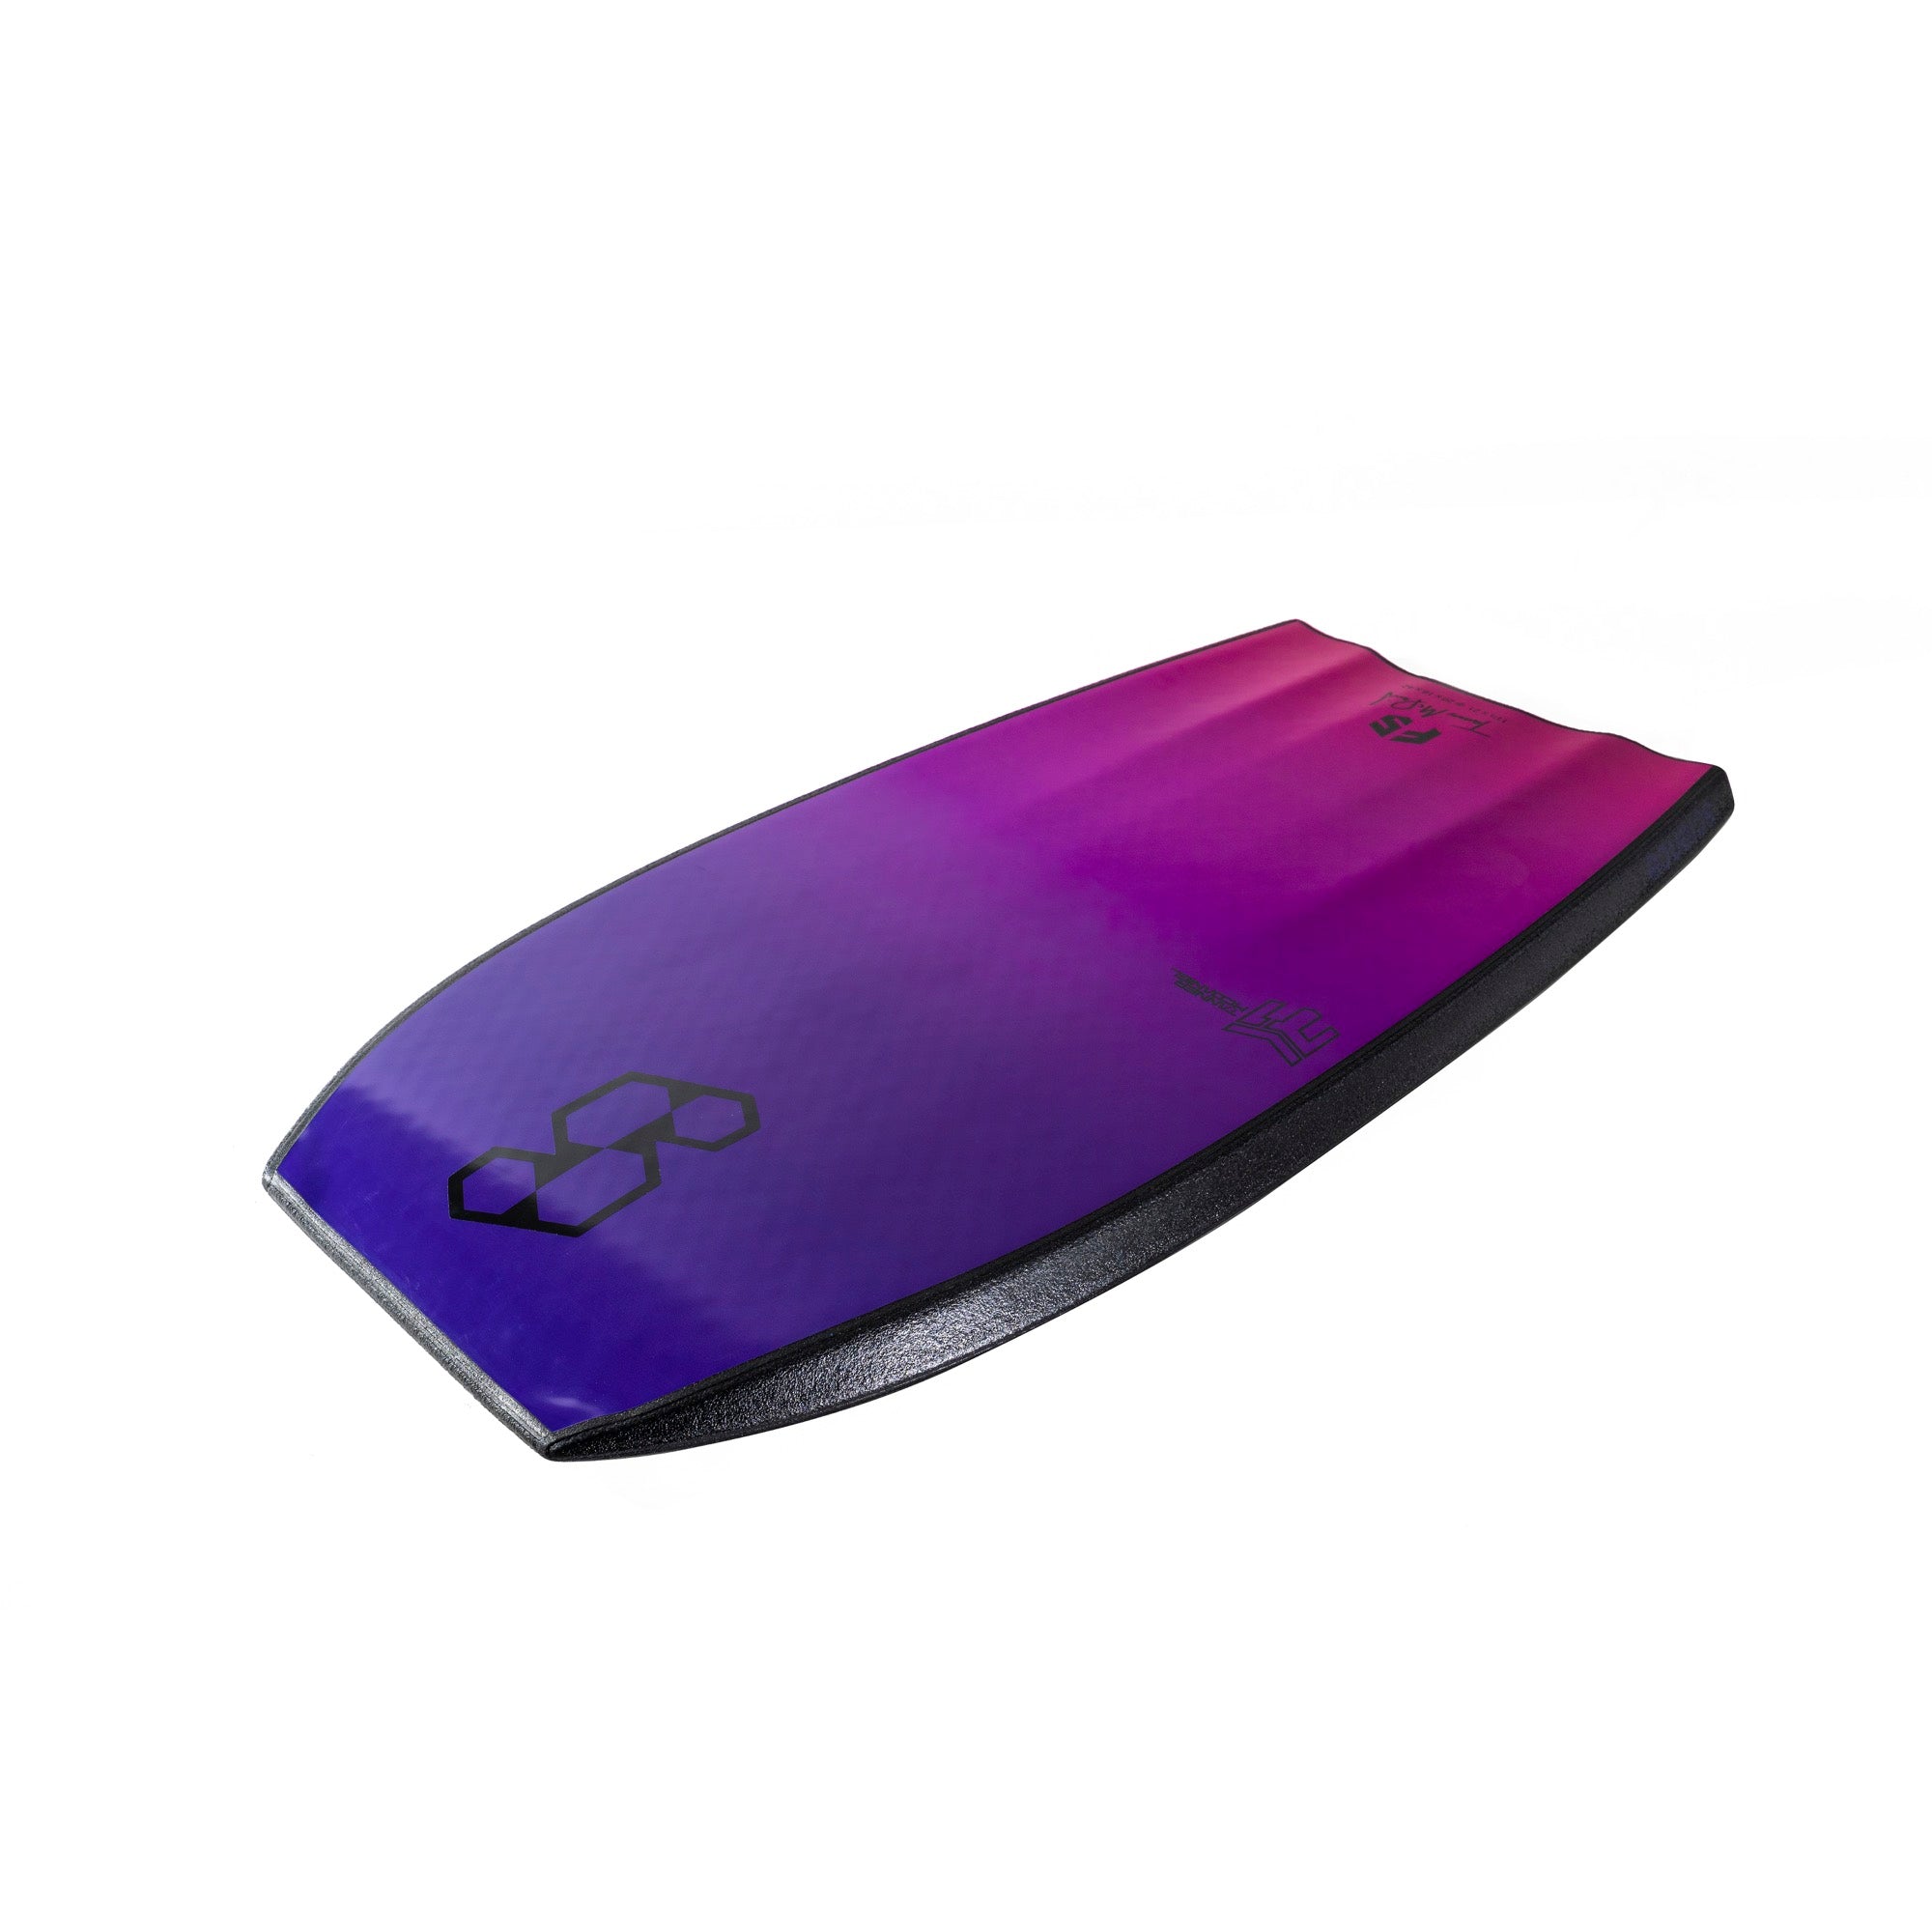 Science Bodyboard - Tanner Flare Serie F5 (PP) - Tri Quad - Black / Purple Pink